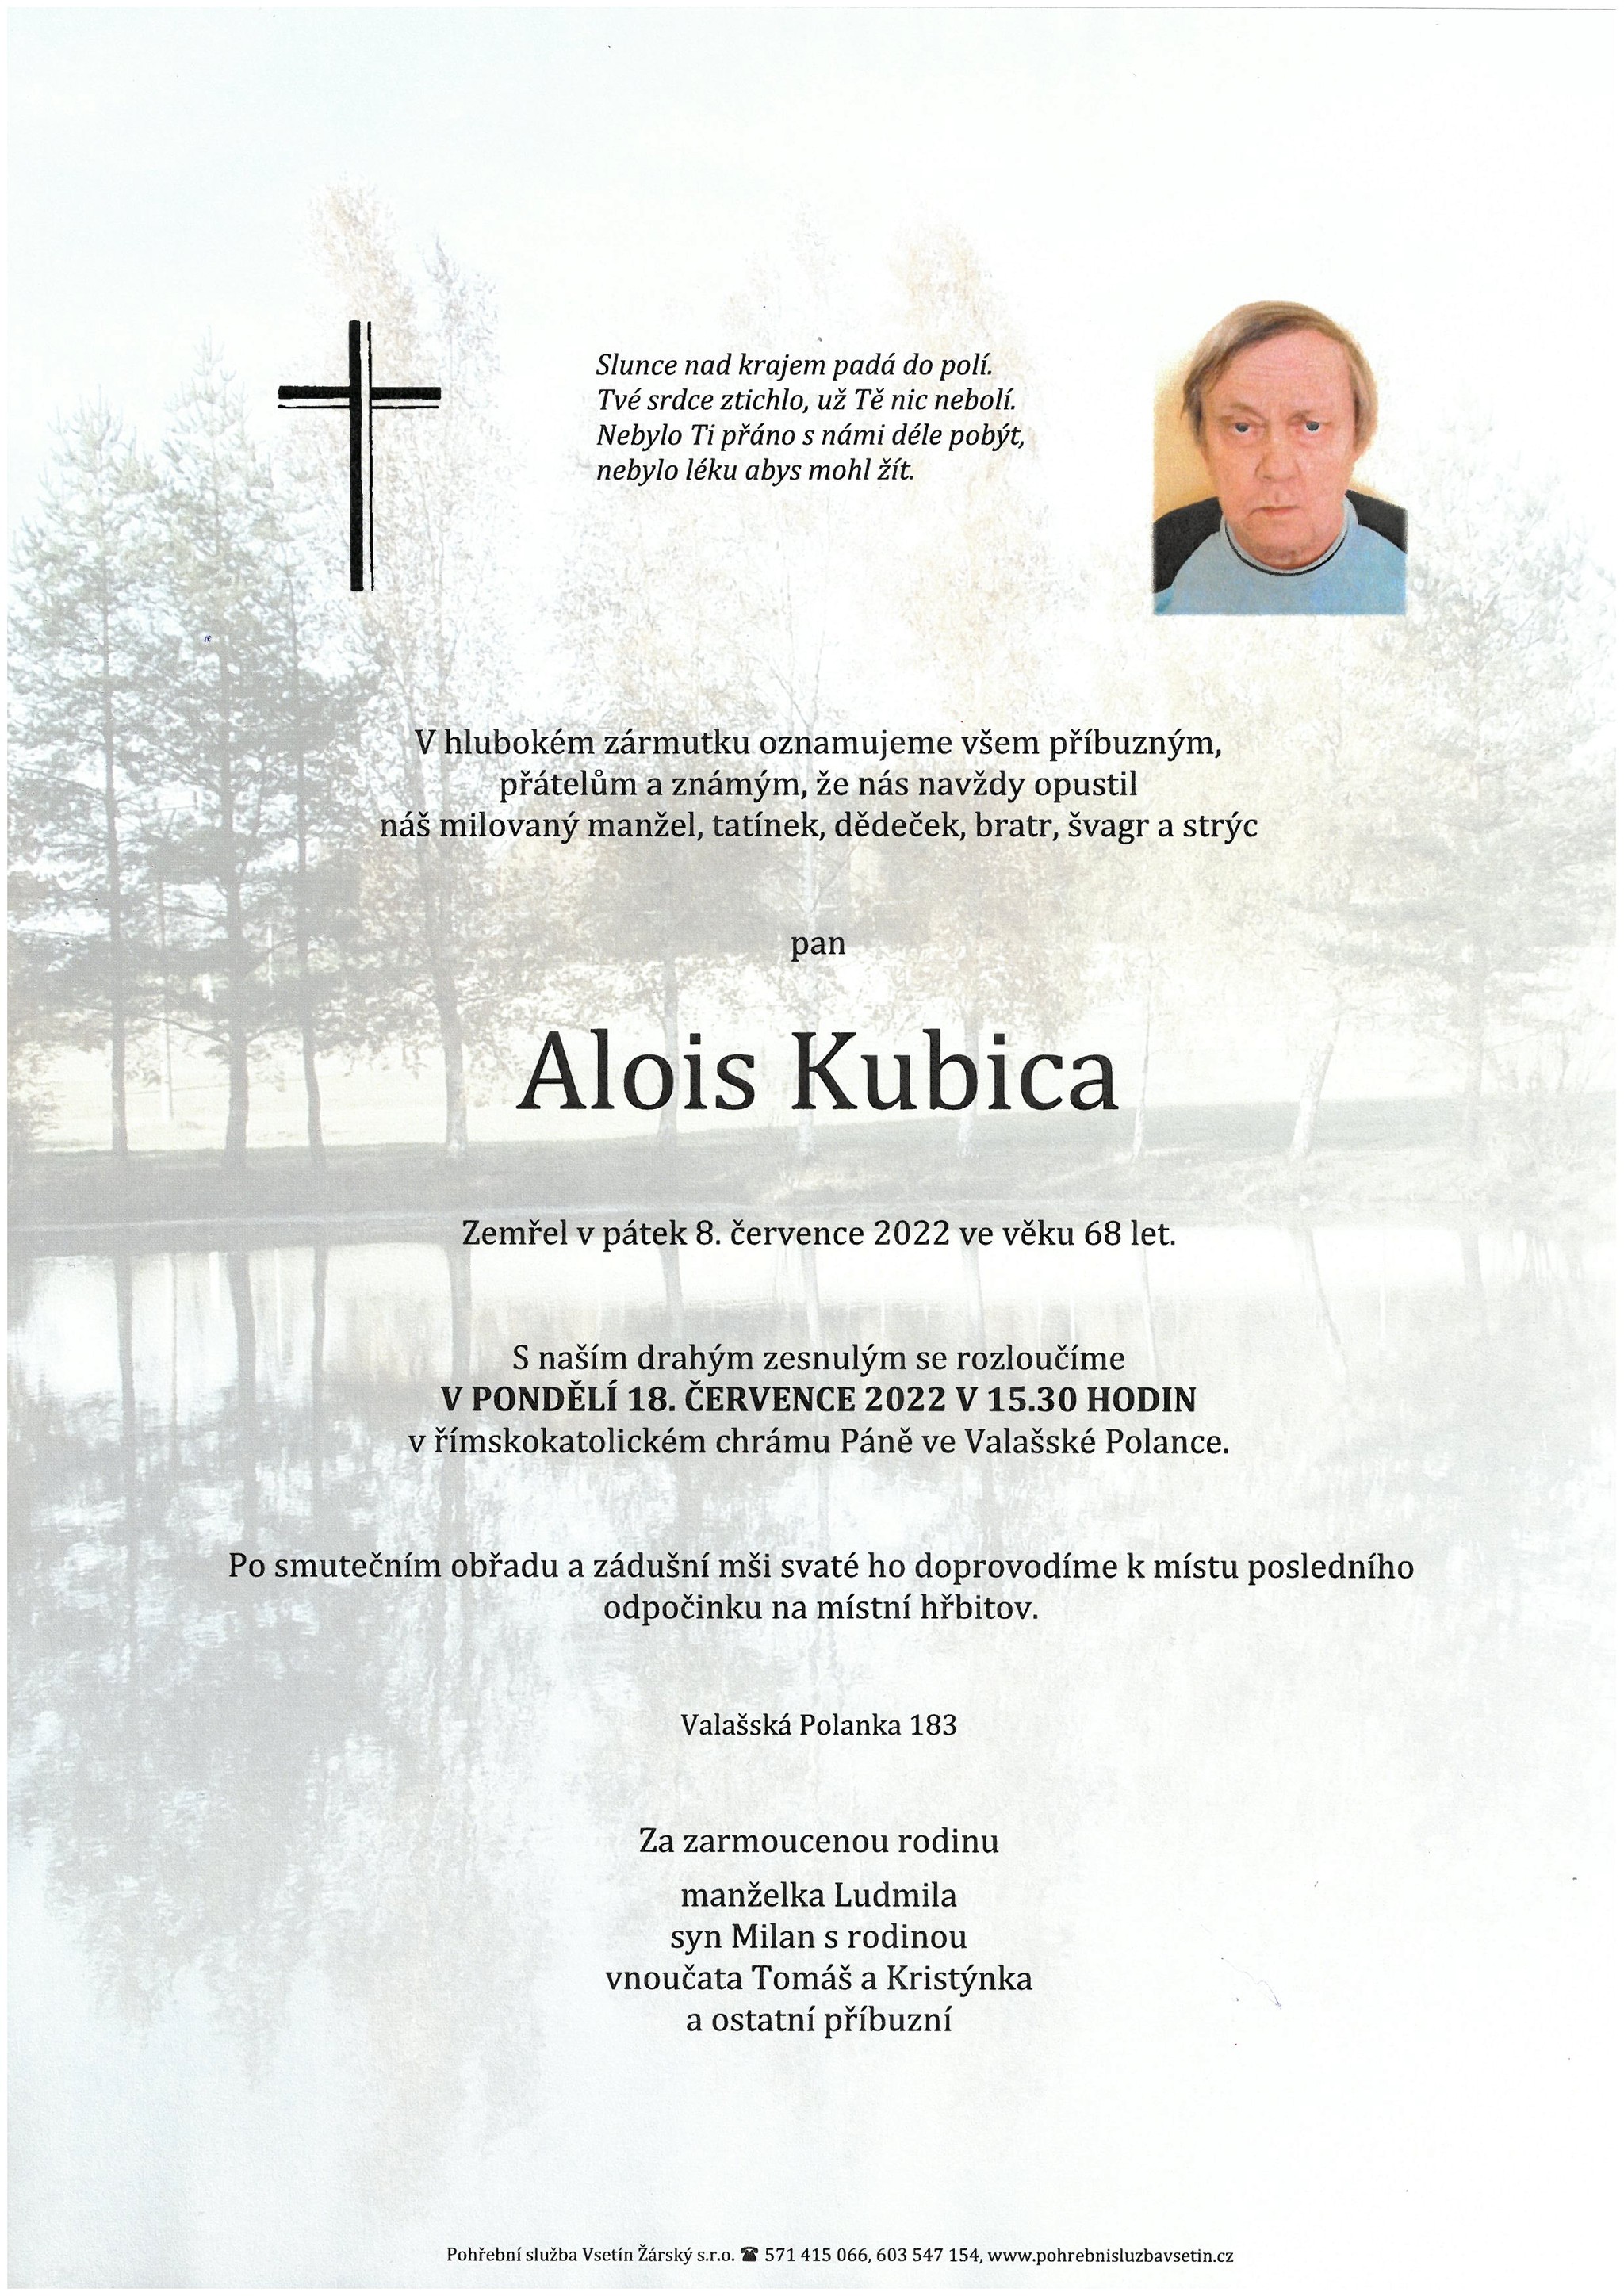 Alois Kubica